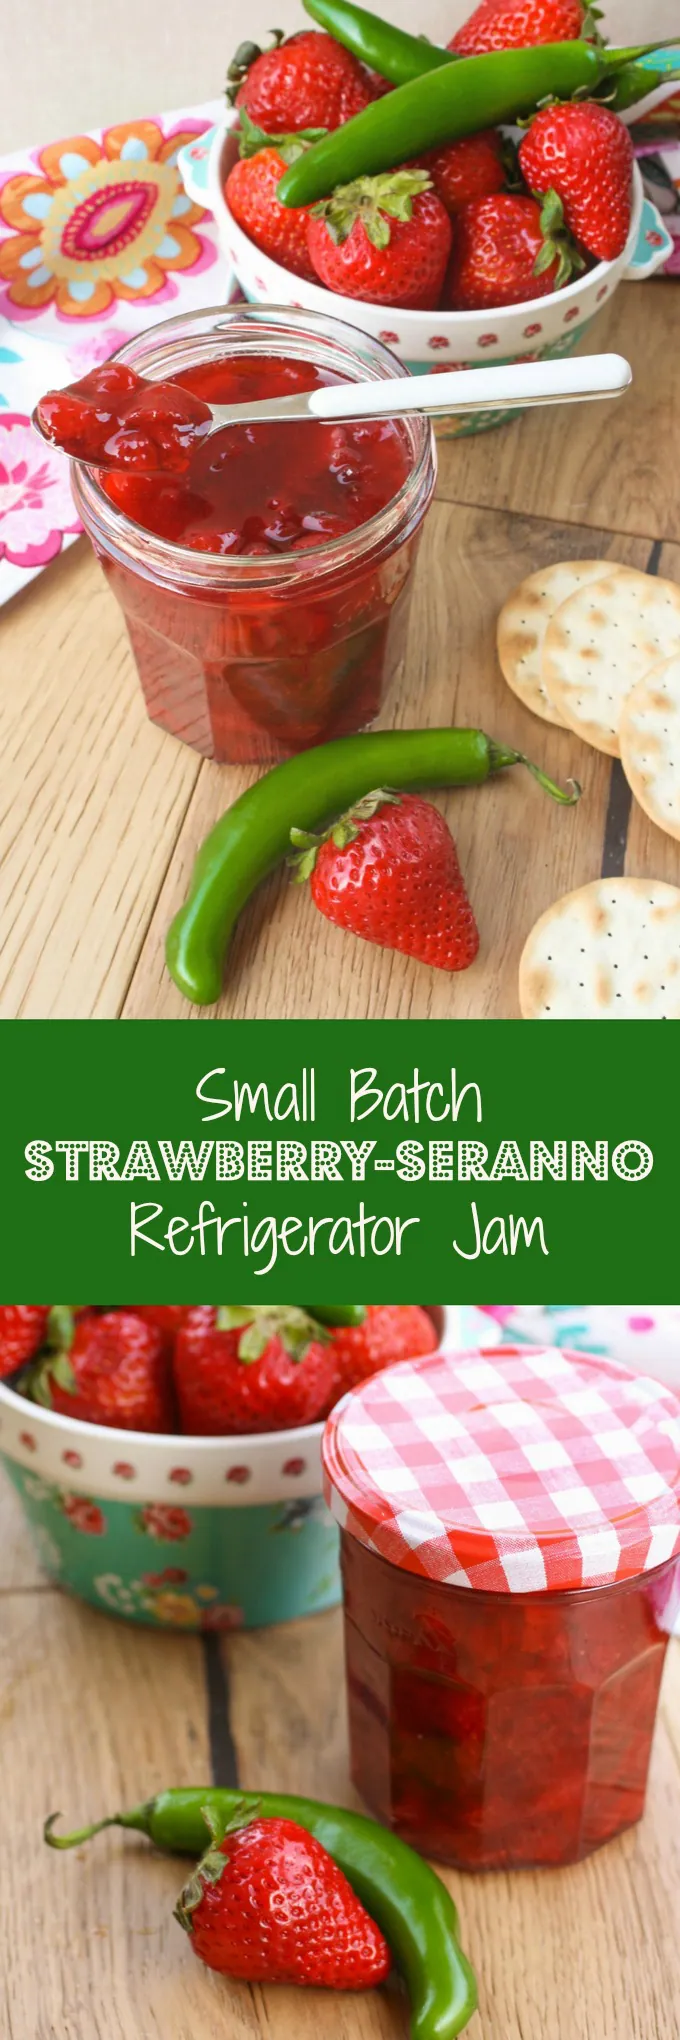 Small Batch Strawberry-Serrano Refrigerator Jam is a wonderful, seasonal treat. You'll love the flavors!